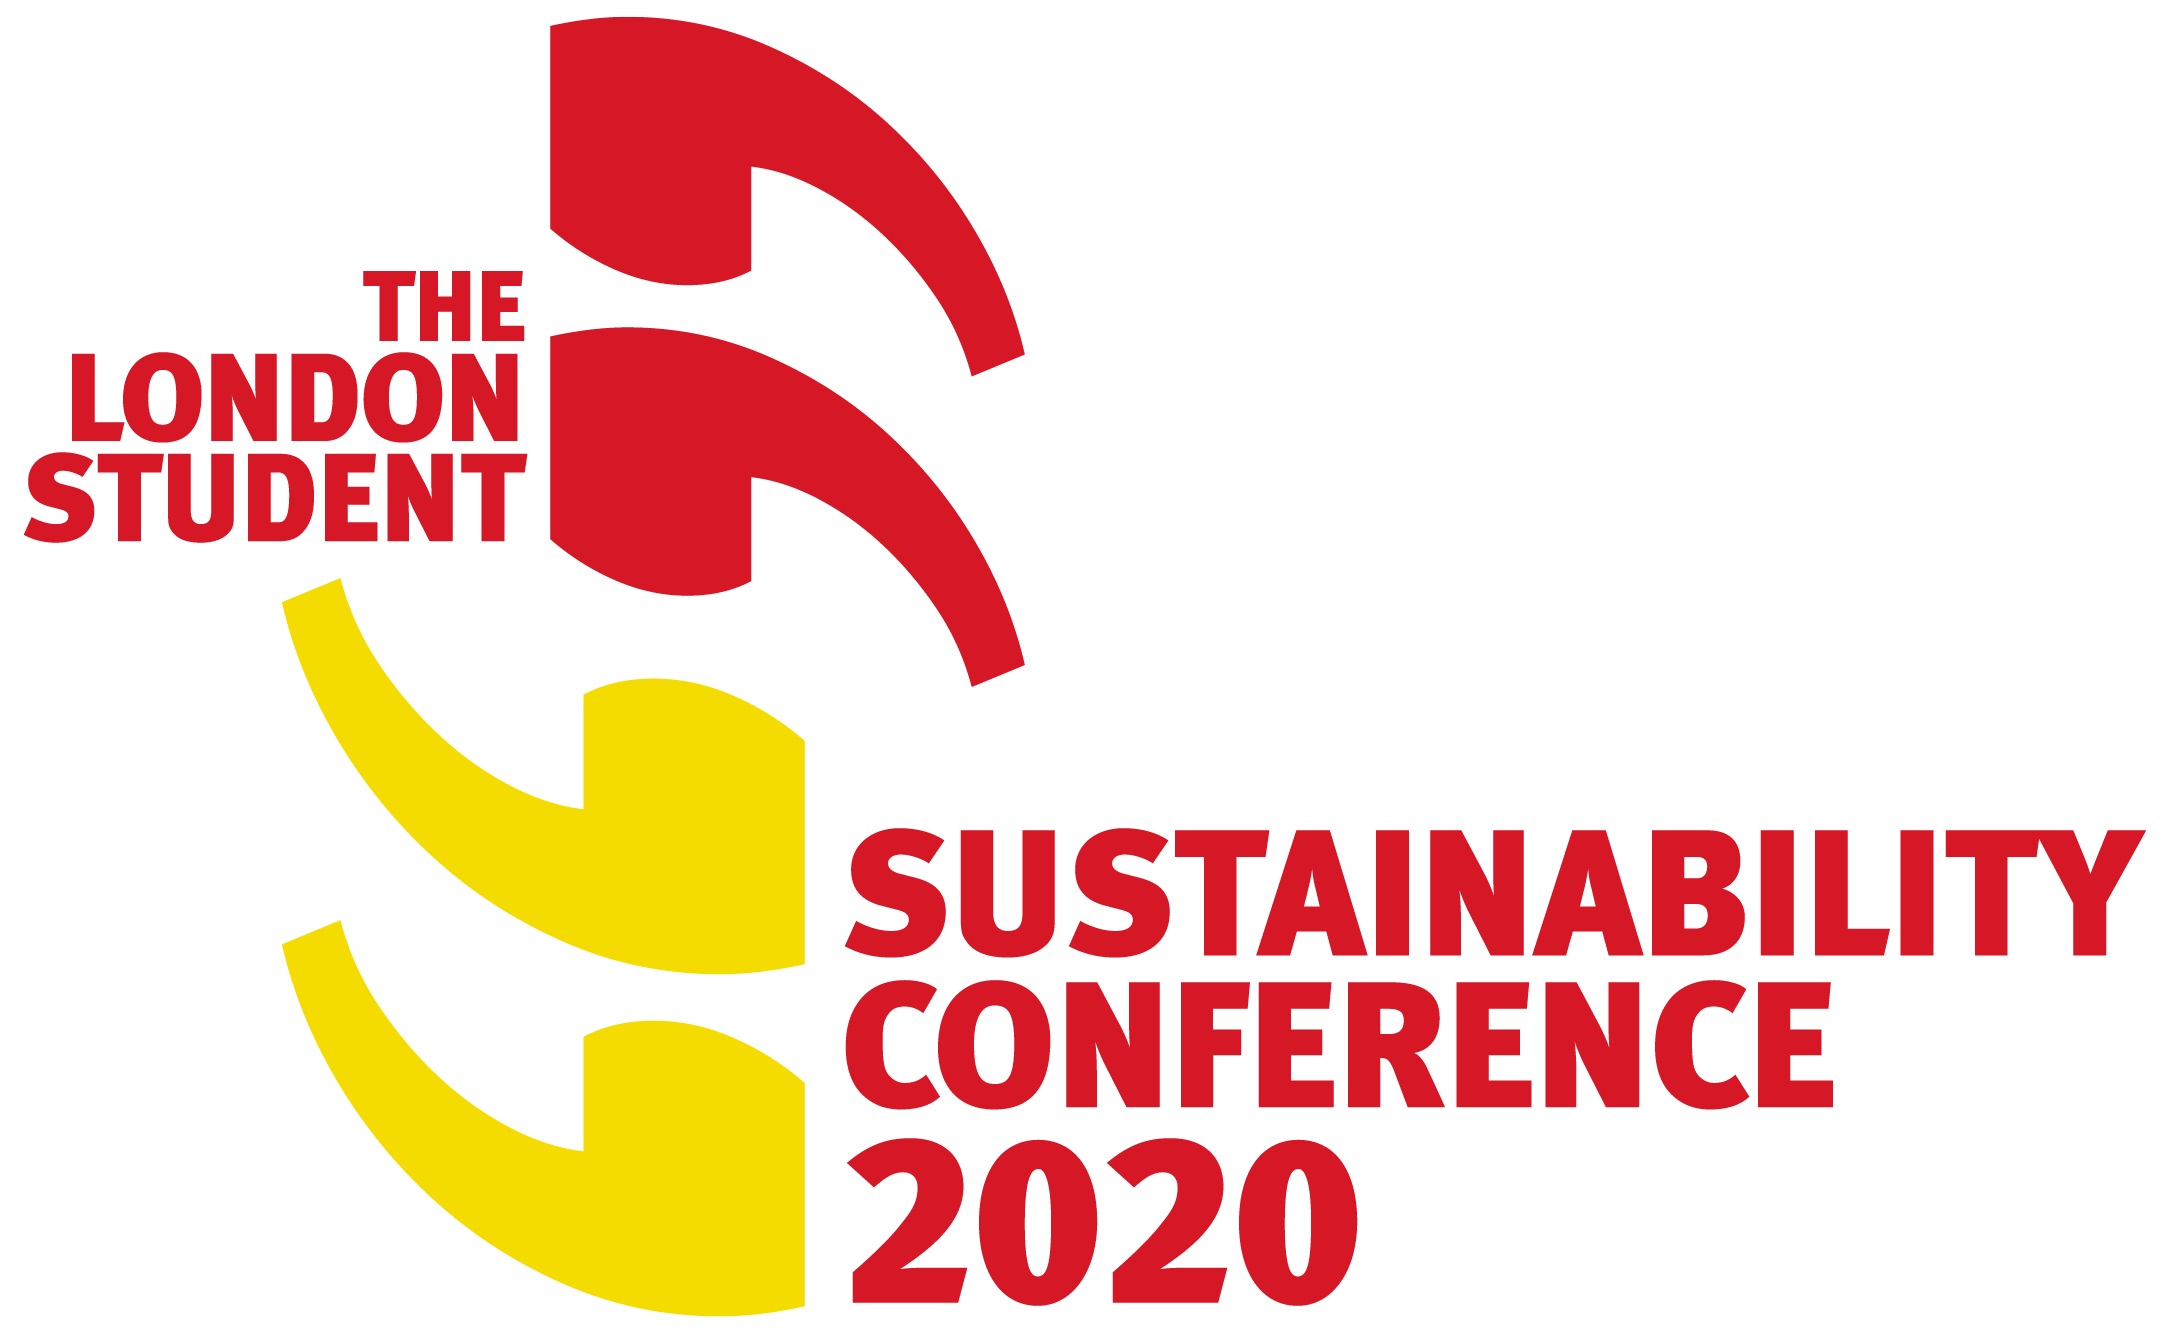 London Student Sustainability Conference 2020 logo